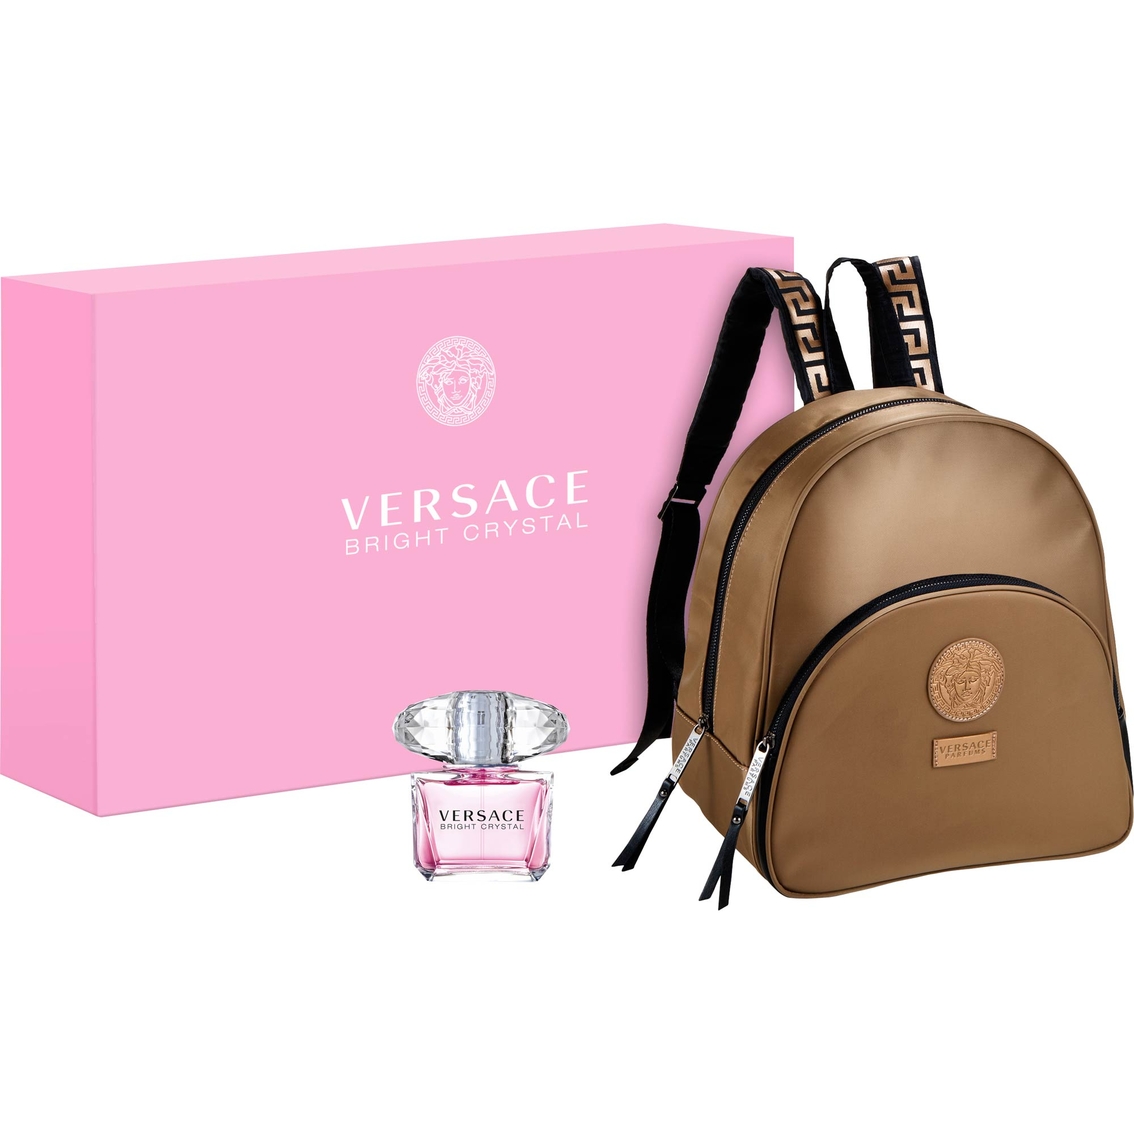 versace cologne backpack set